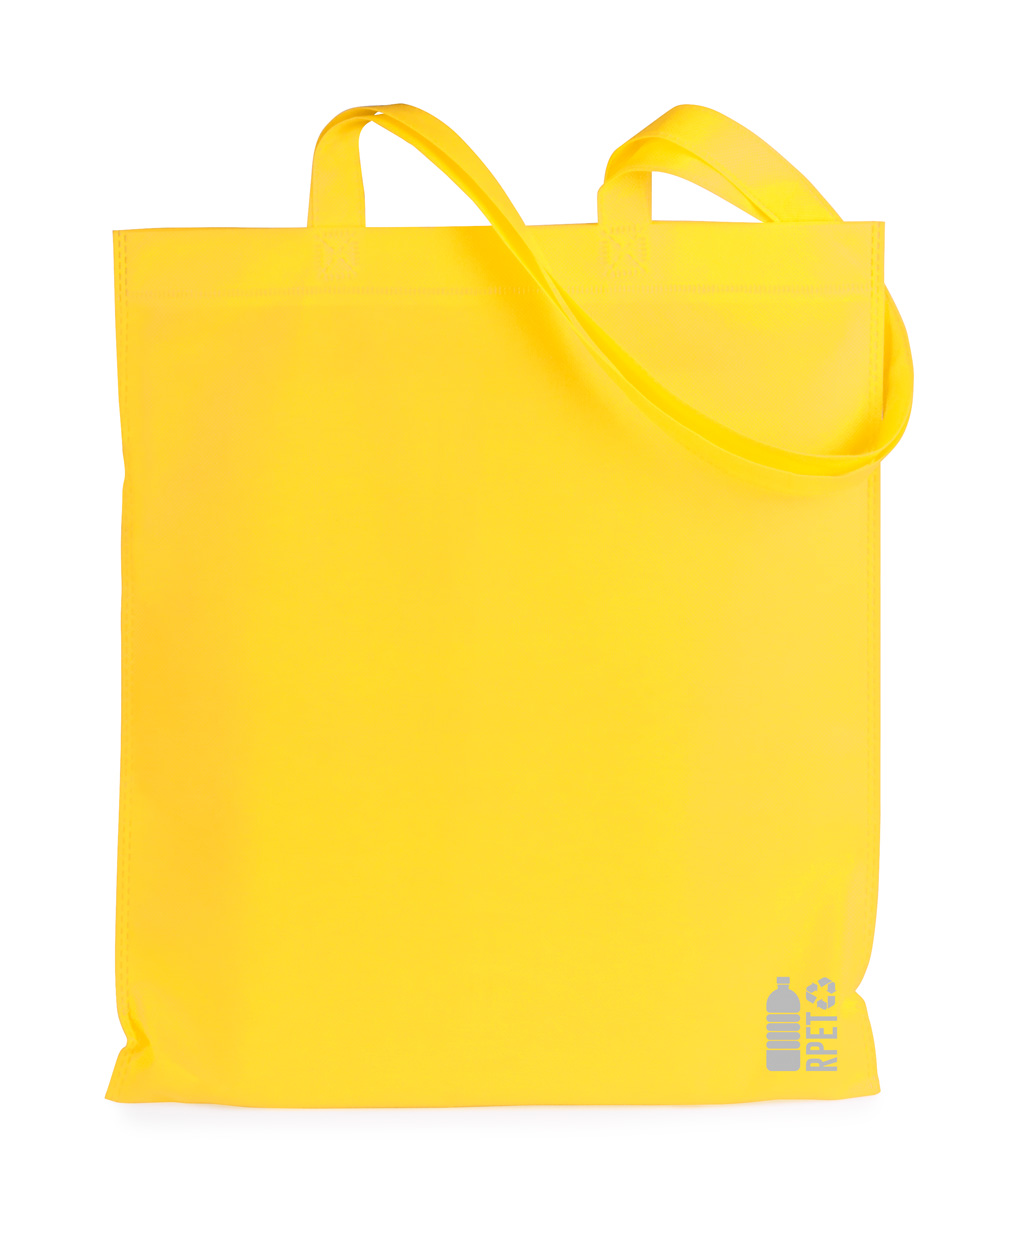 Rezzin RPET shopping bag - yellow